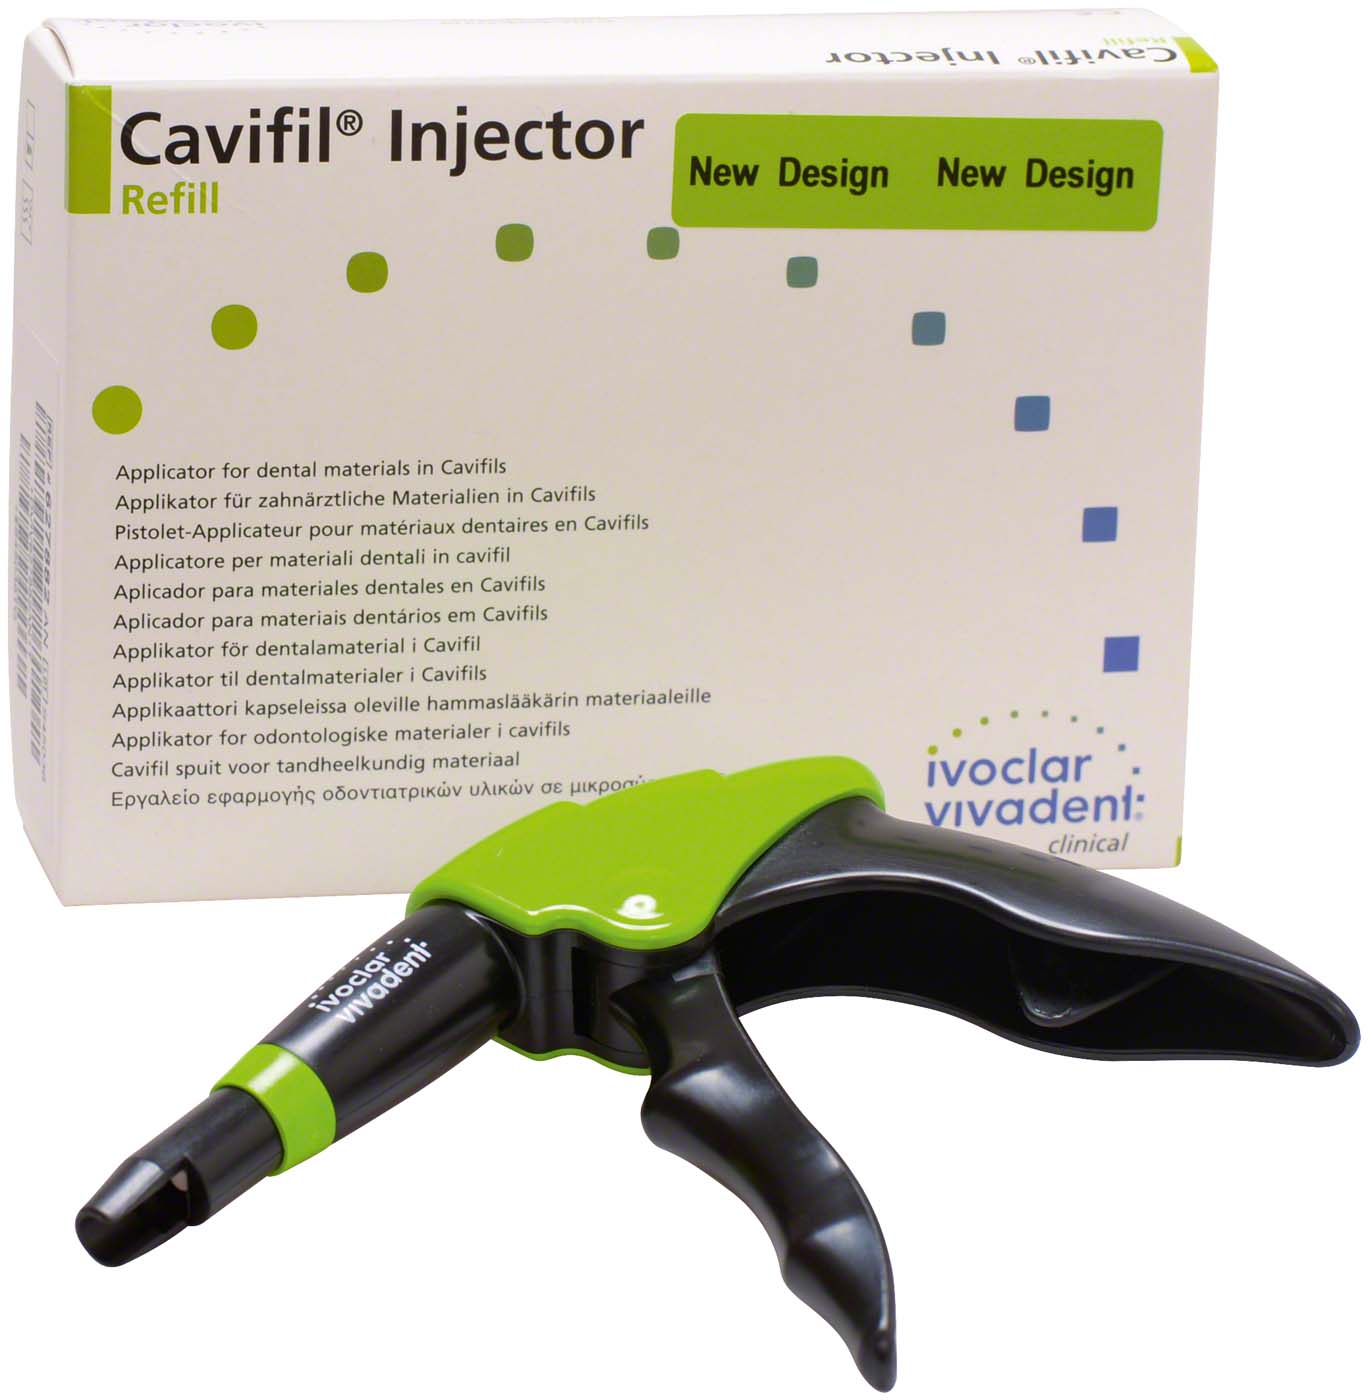 Cavifil® Injector Ivoclar Vivadent